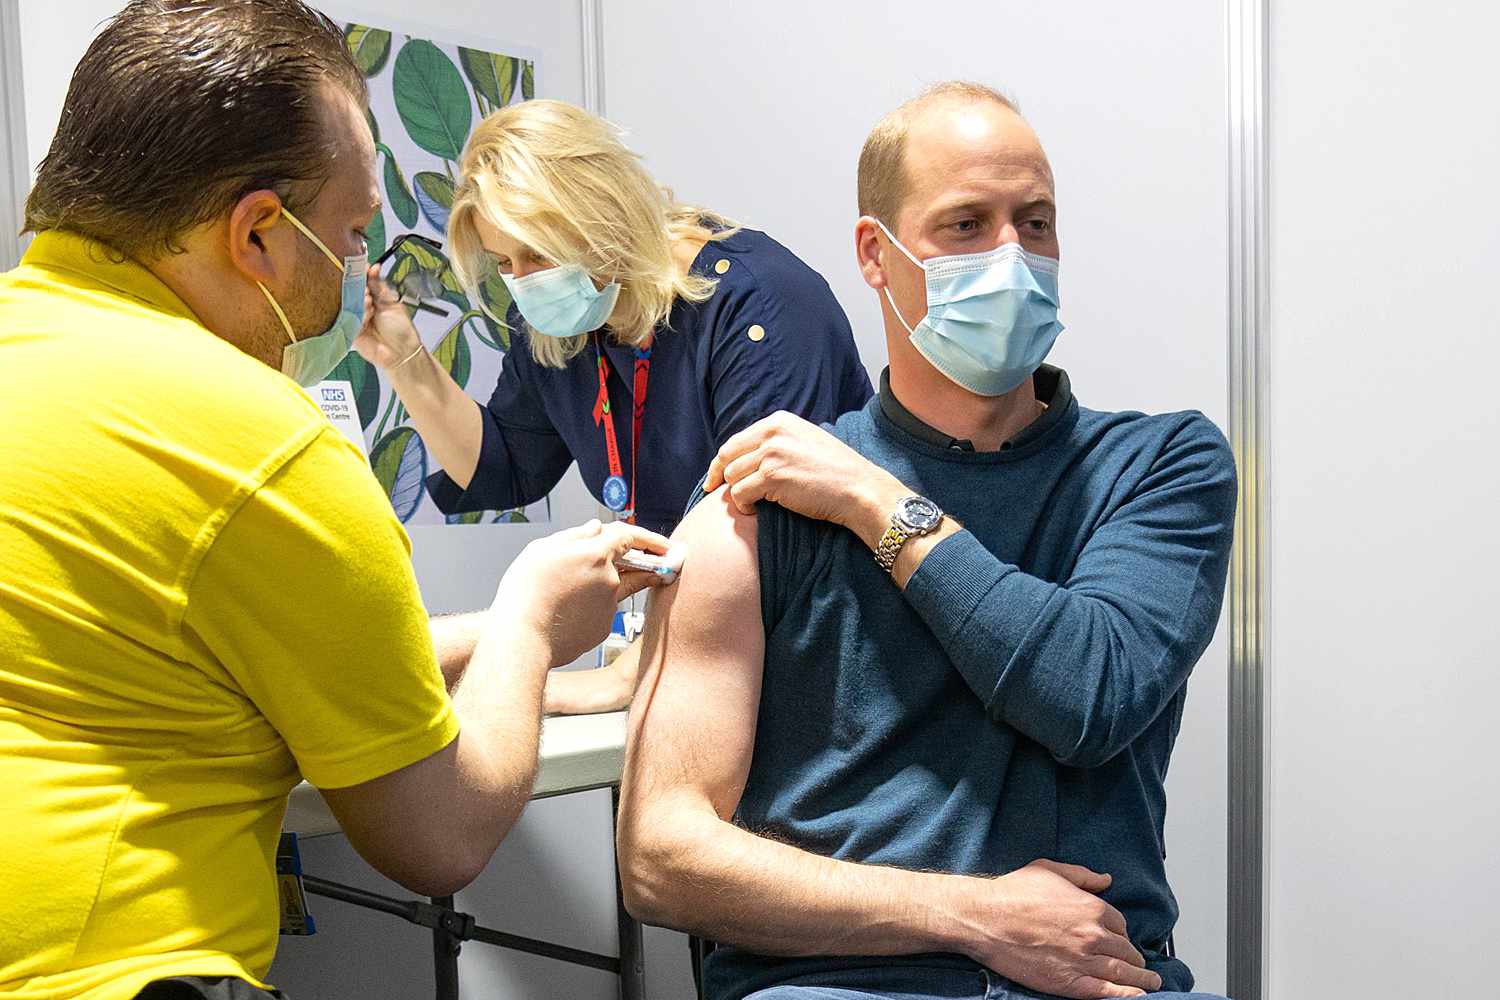 Prince William gets the Covid Vaccine